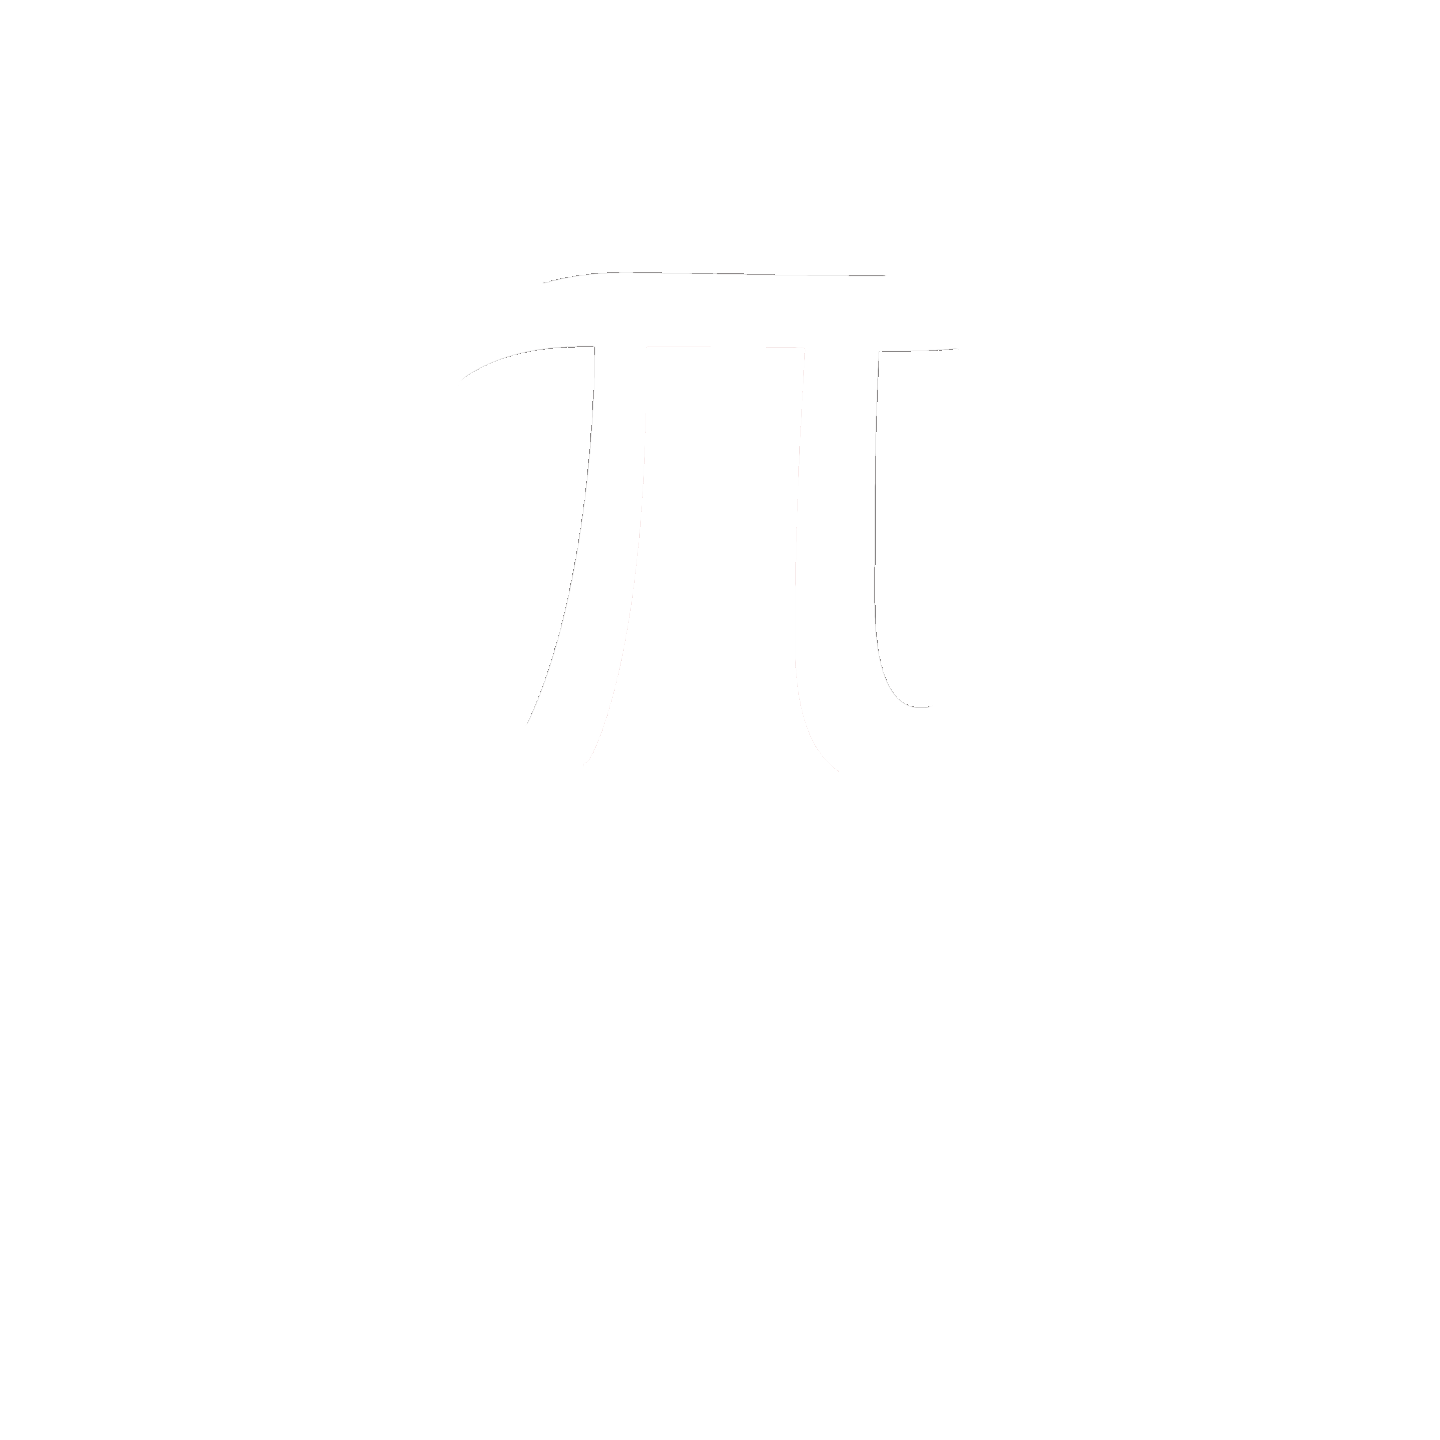  Billy Pye Goaltending Academy